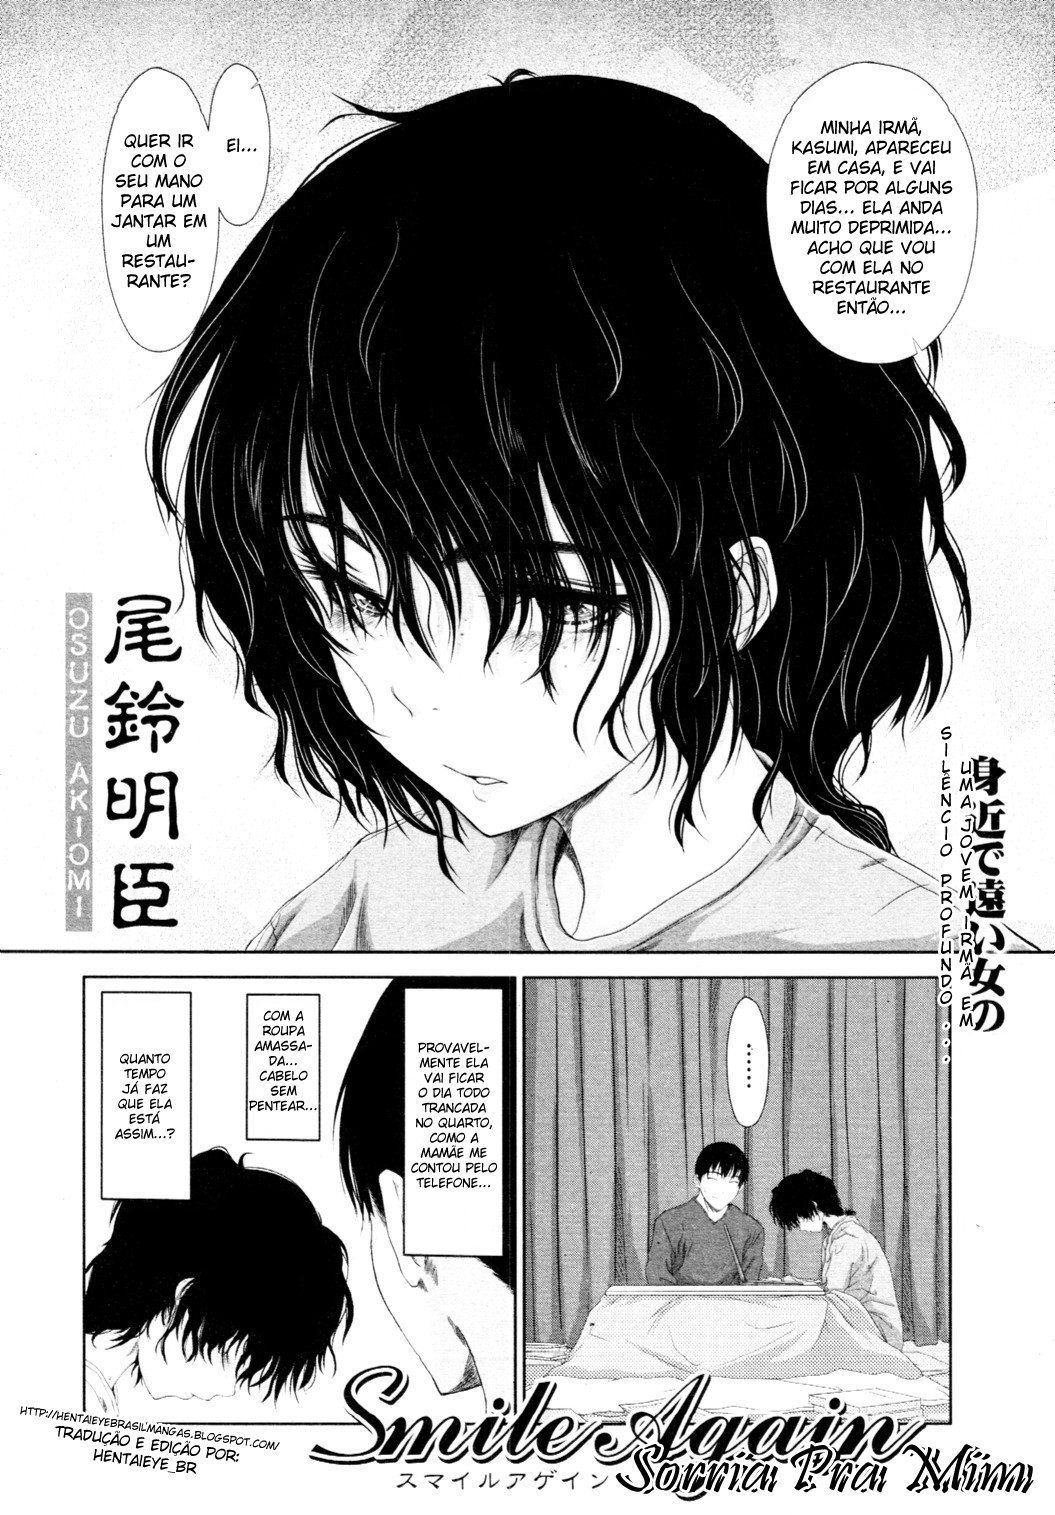 hentaihome.net – Kazumi à irmã deprimida (2)